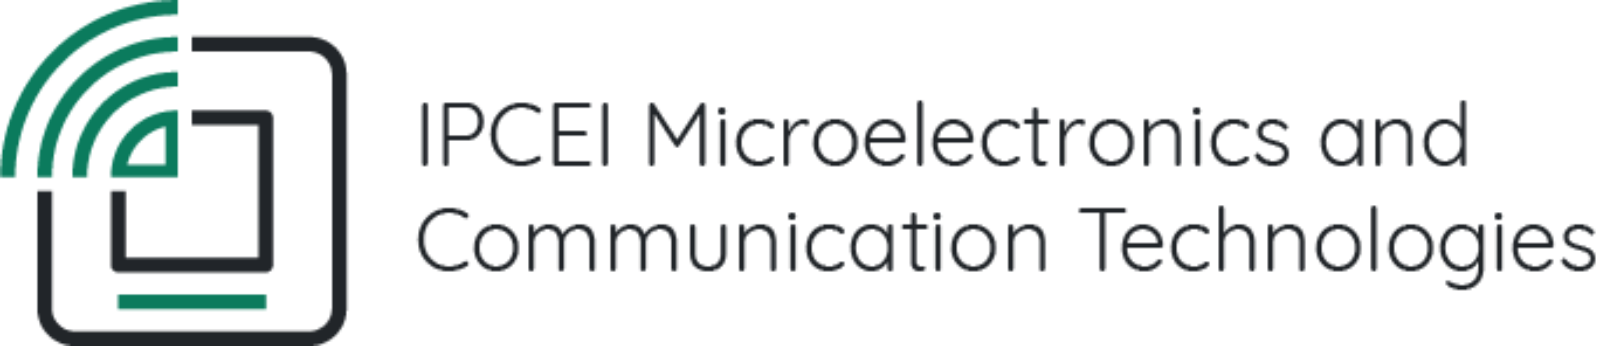 IPCEI-MICROELECTRONICS-CT logo